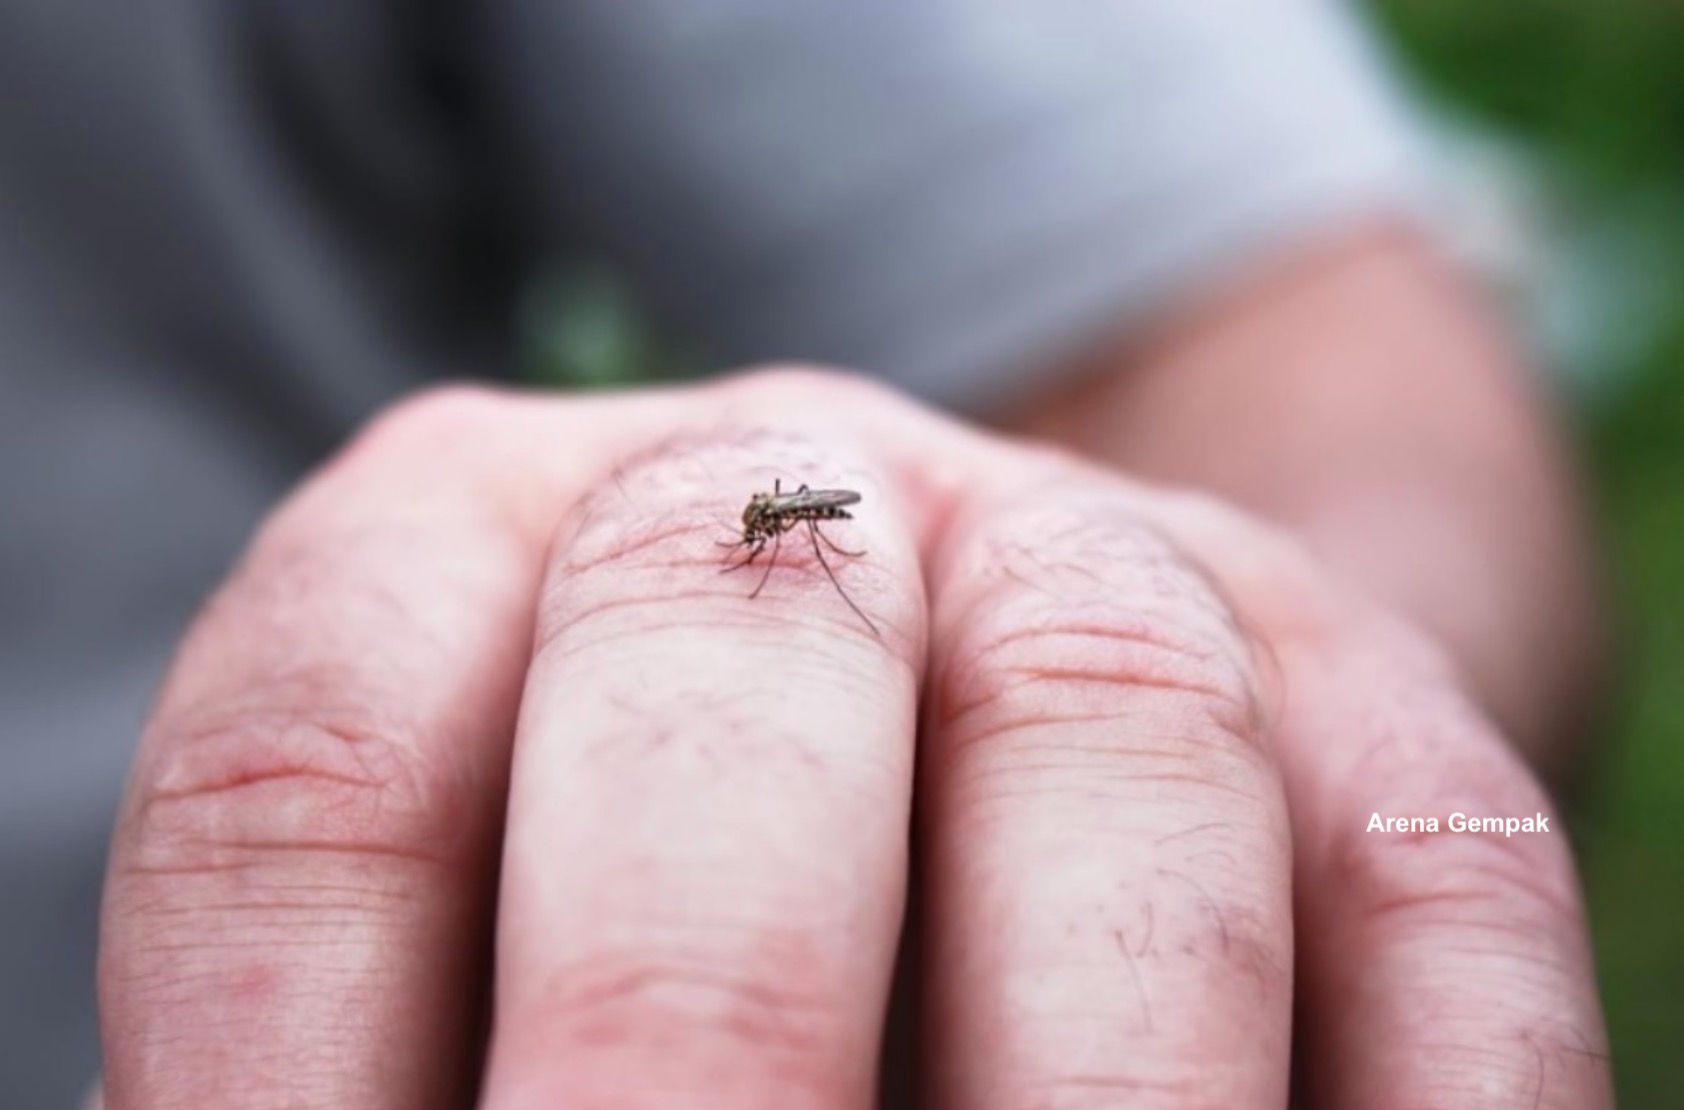 Punca Kenapa Nyamuk Suka Sasarkan Untuk Gigit Anda Berbanding Orang Lain